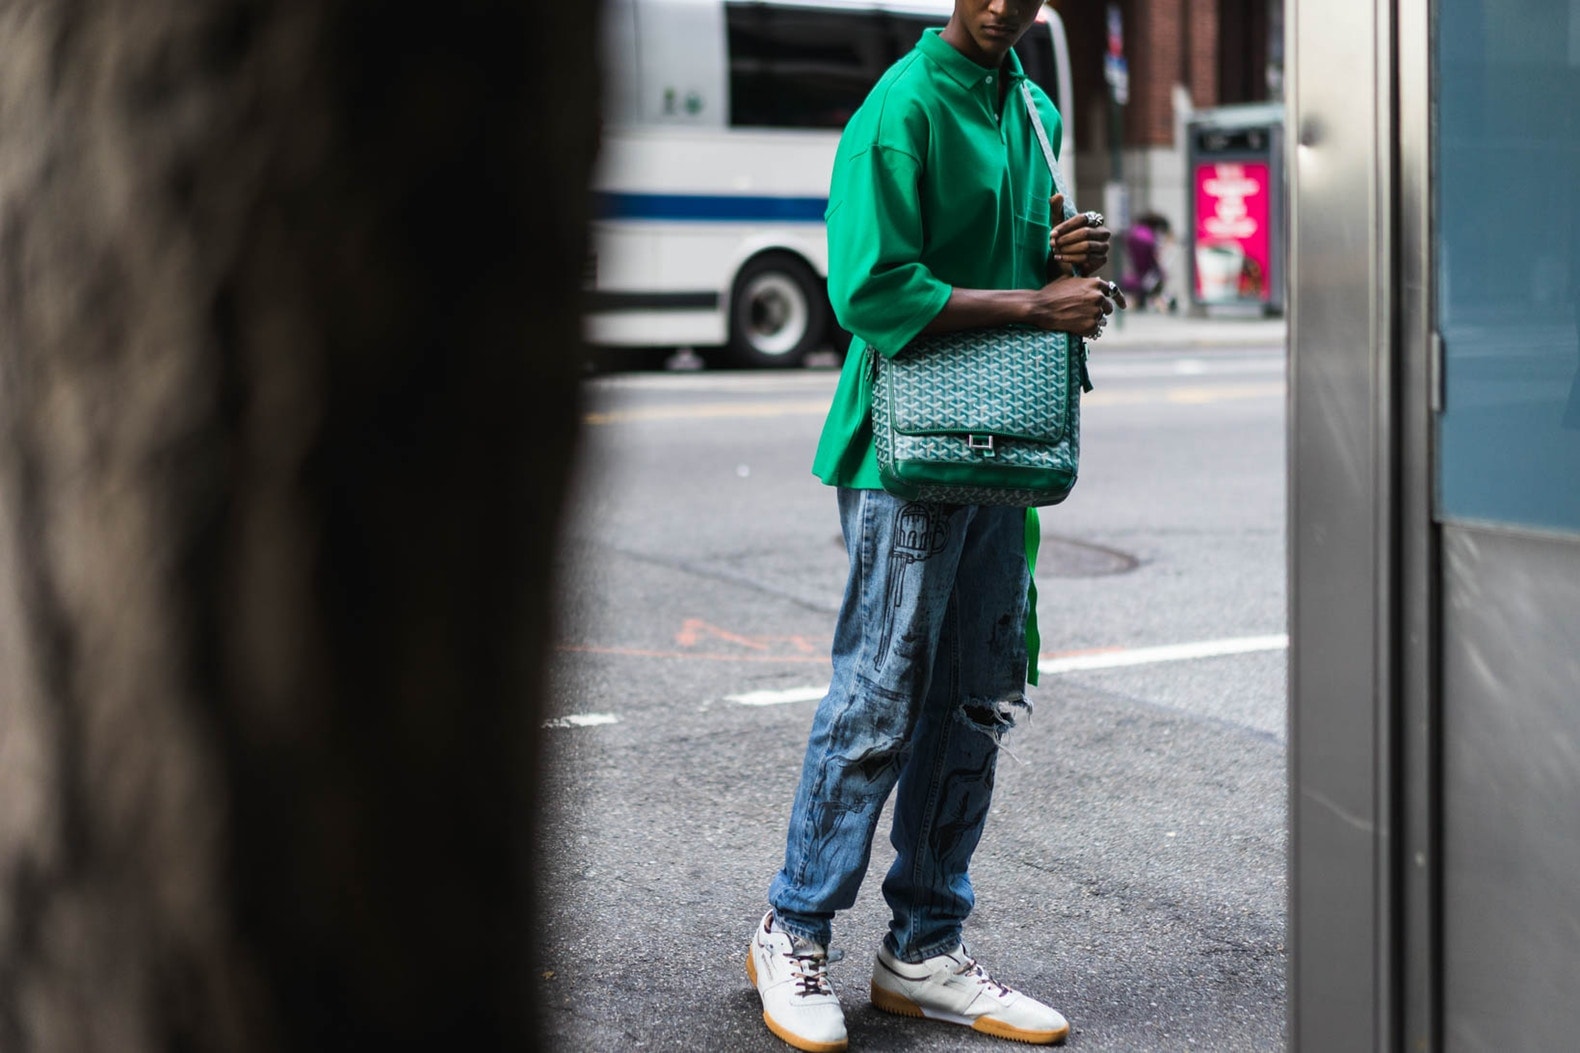 New York Fashion Week: Men’s Street Style Day 1